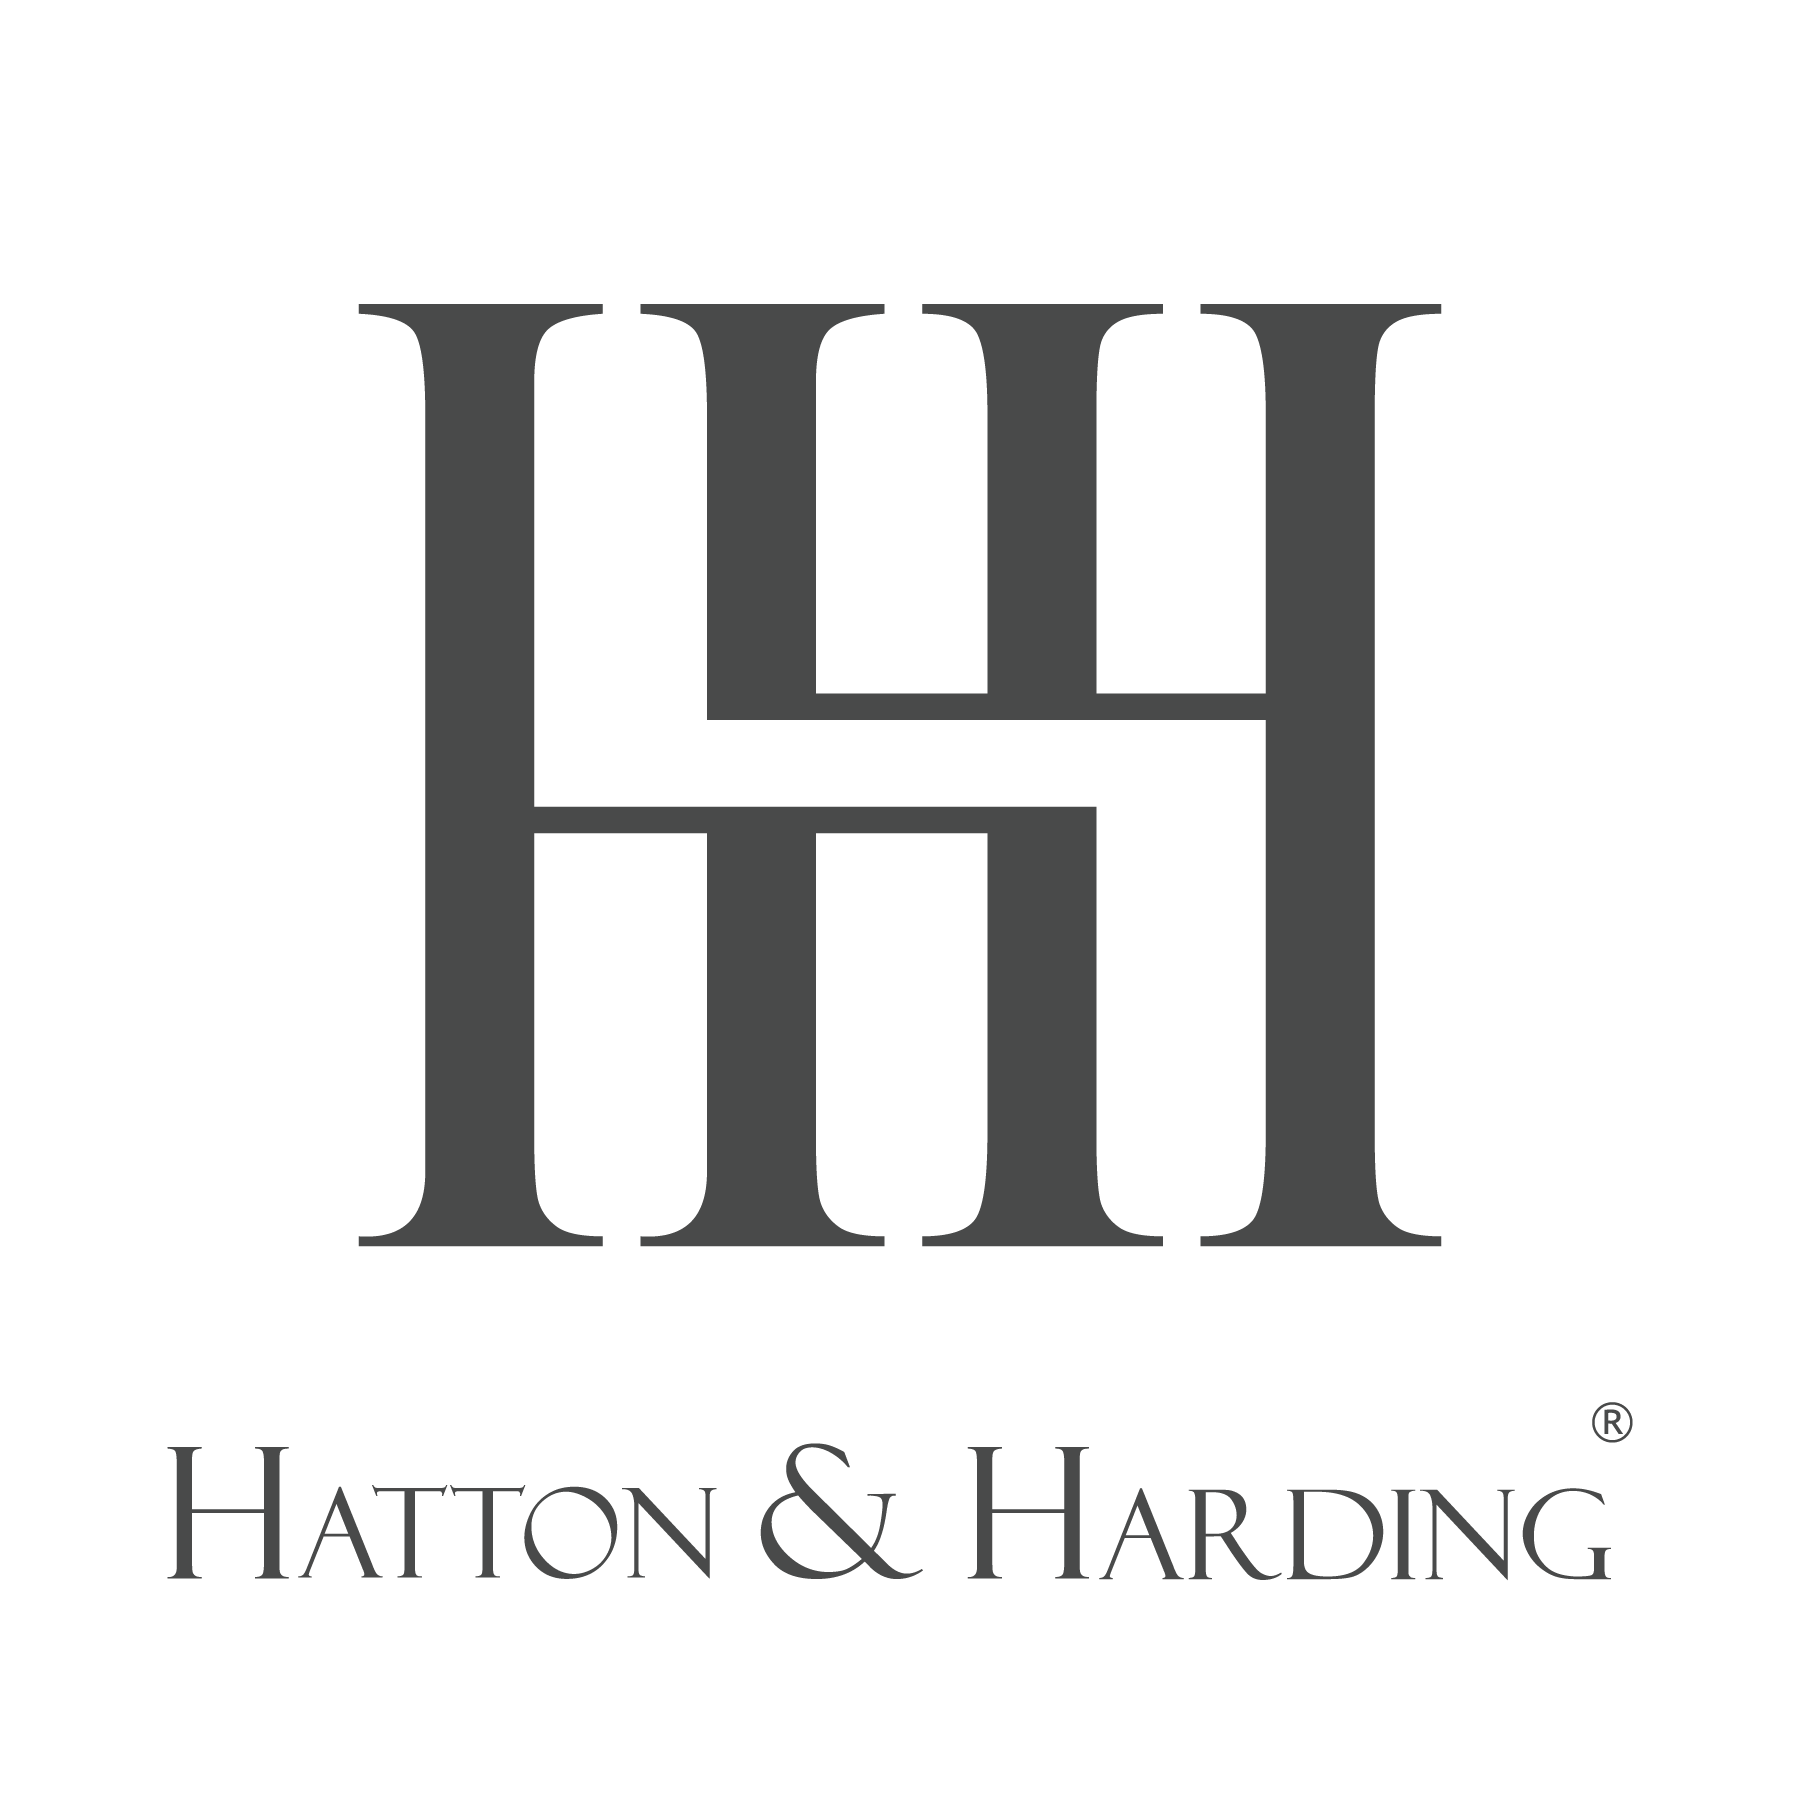 Hatton and Harding logo